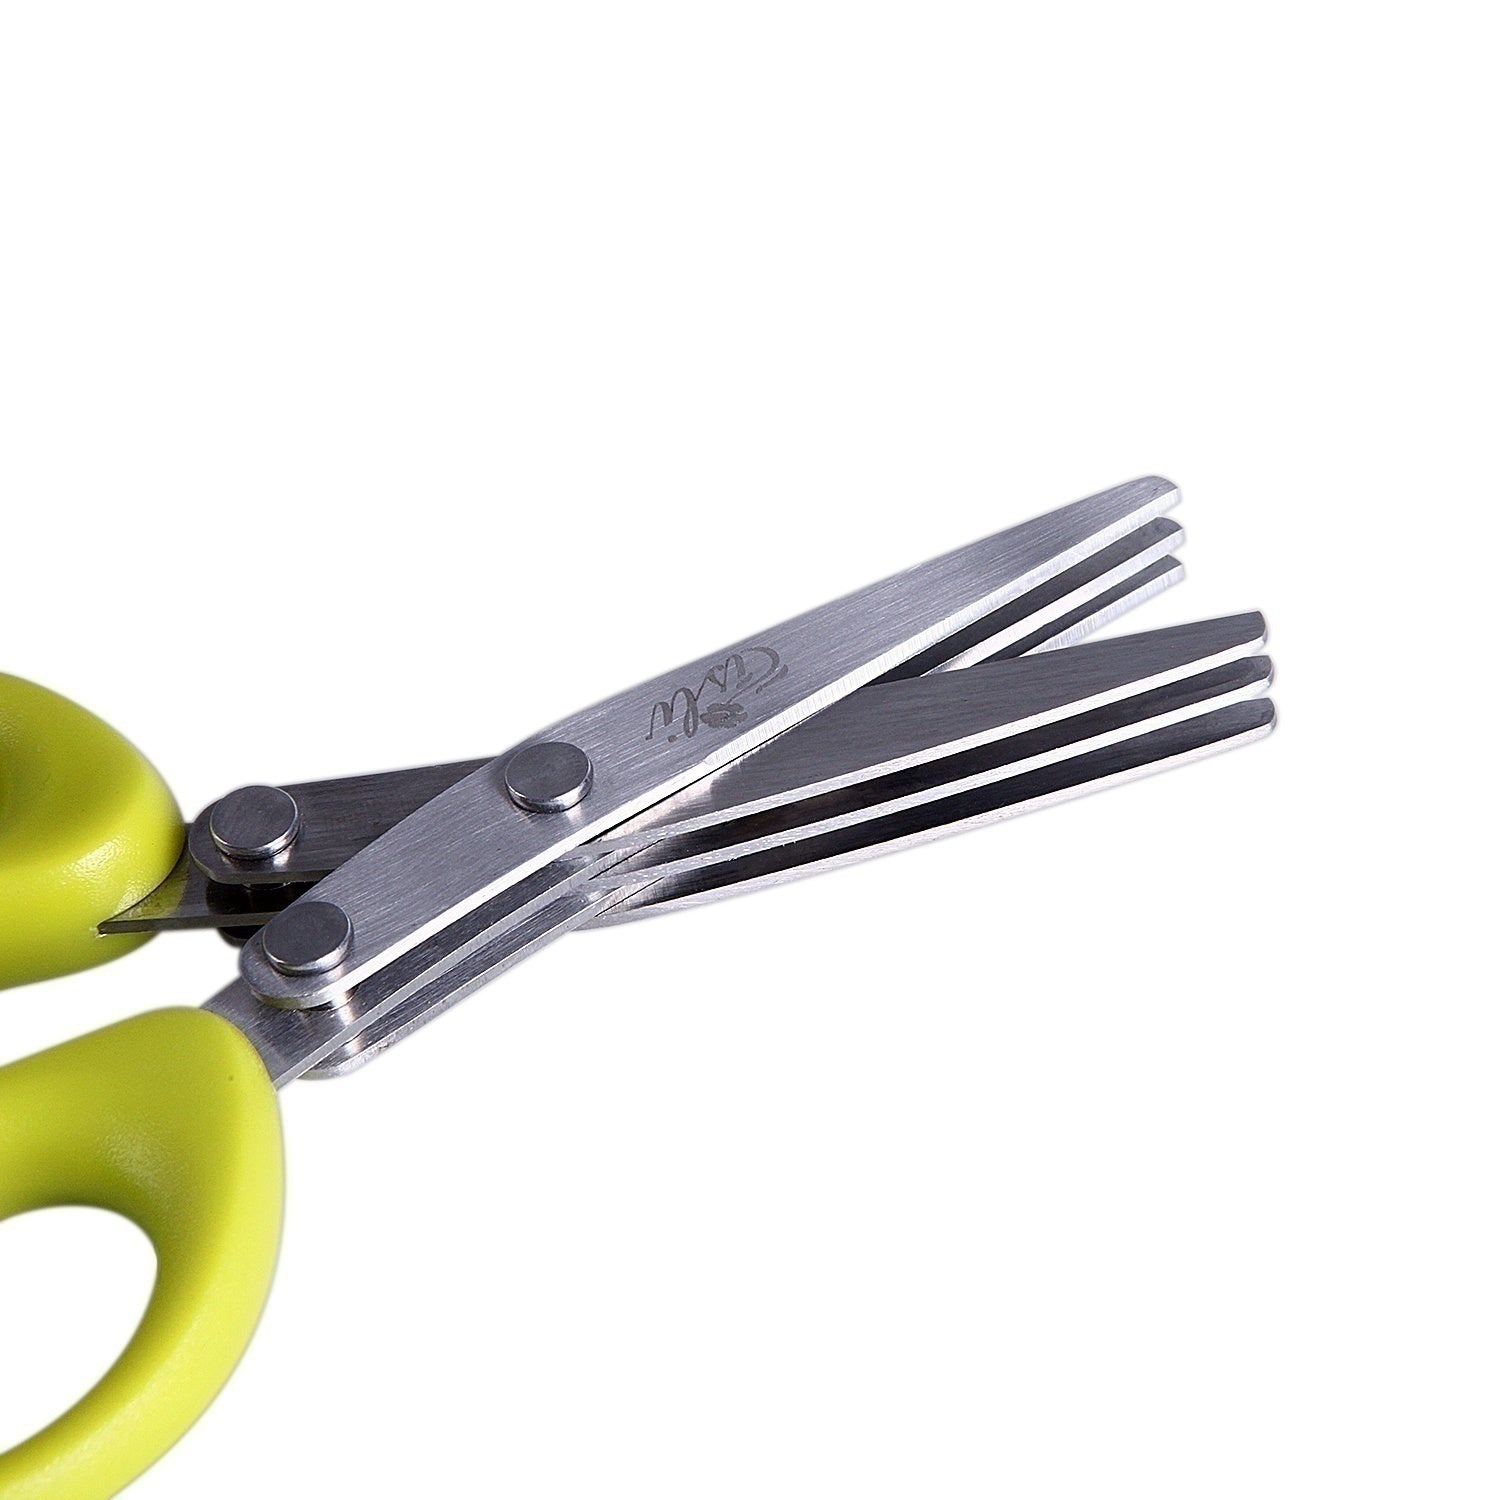 Multifunctional Stainless Steel Kitchen Scissors.